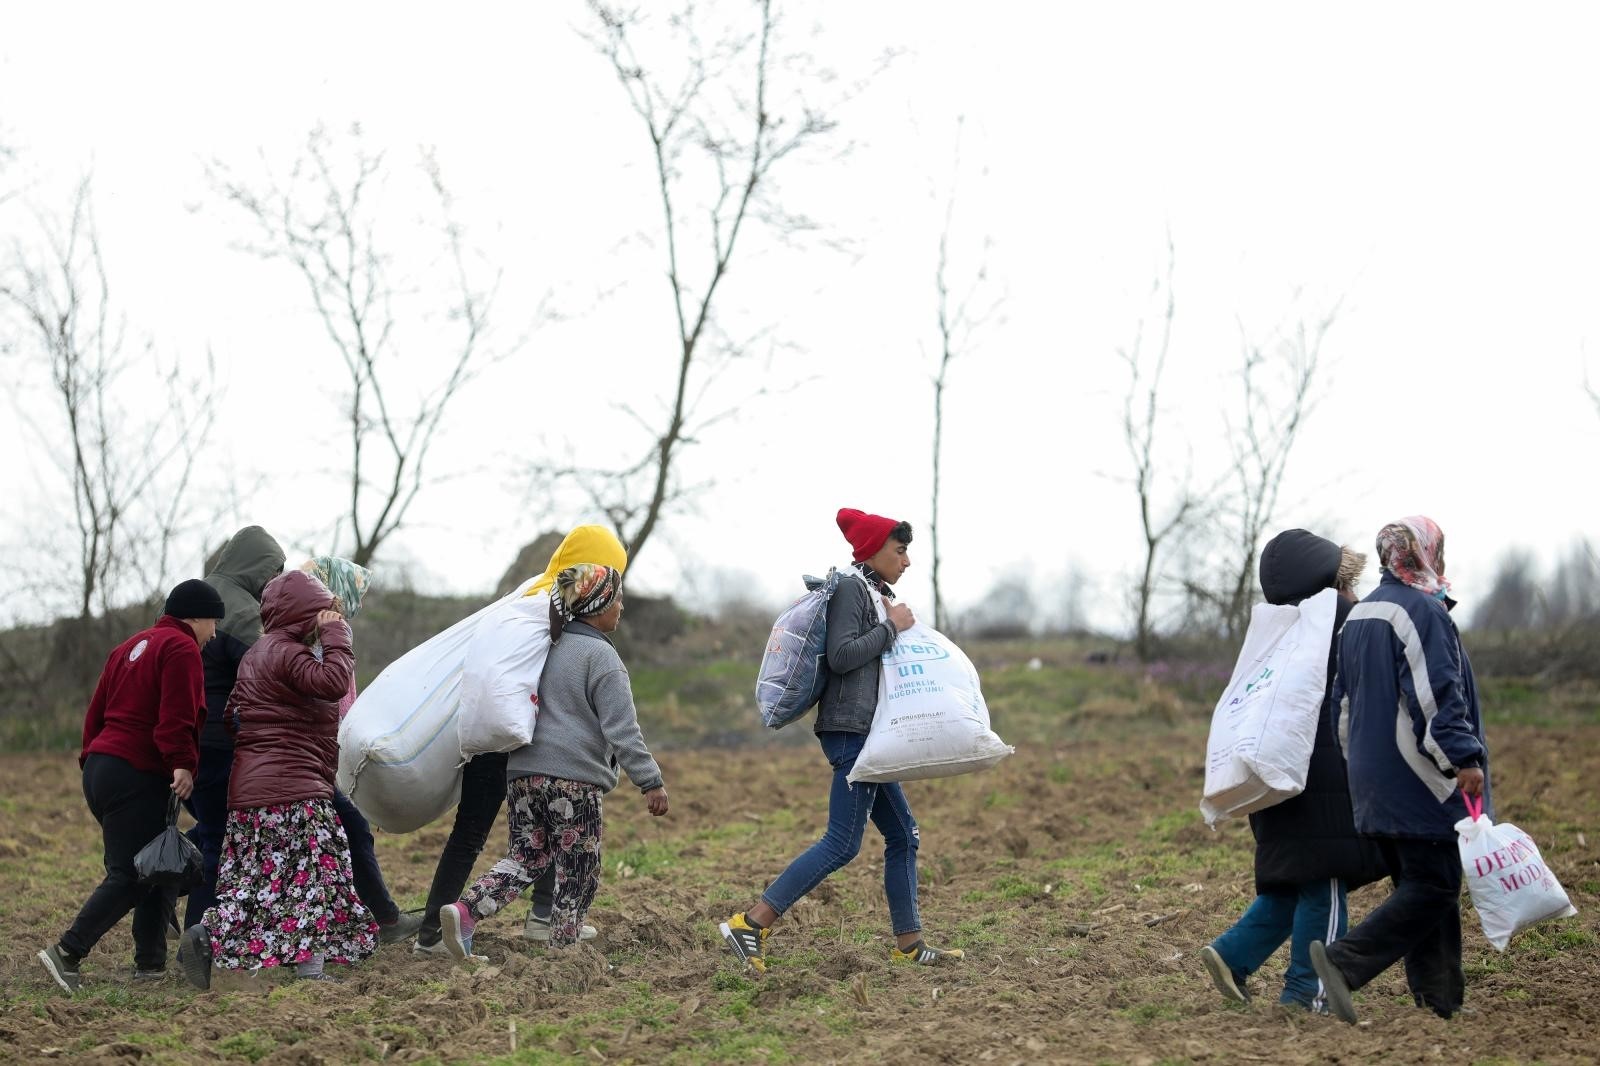 04.03.2020., Edirne, Turska - Najvece zariste izbjeglicke krize trenutno je Pazarkule, granicni prijelaz izmedju Turske i Grcke.
Photo: Armin Durgut/PIXSELL